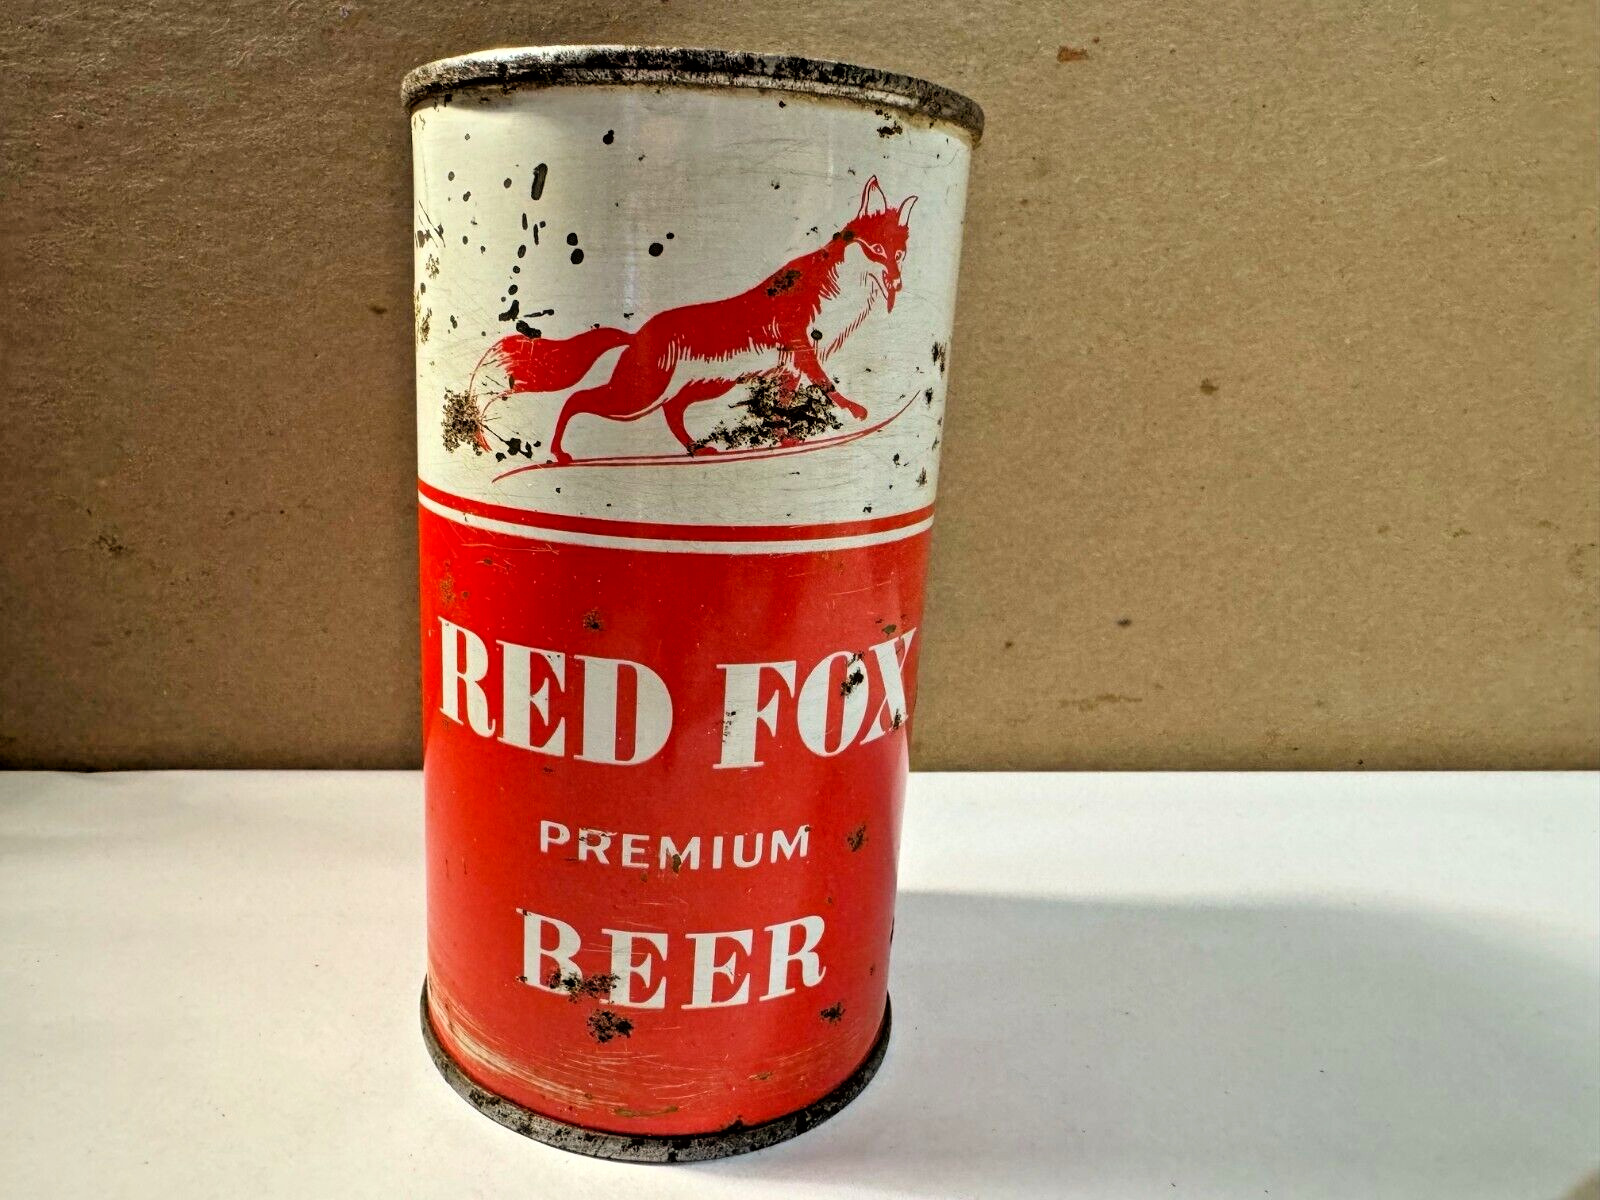 RED FOX PREMIUM BEER CENTURY BREWING, NORFOLK, VA VIRGINIA TAX LID VERY SCARCE